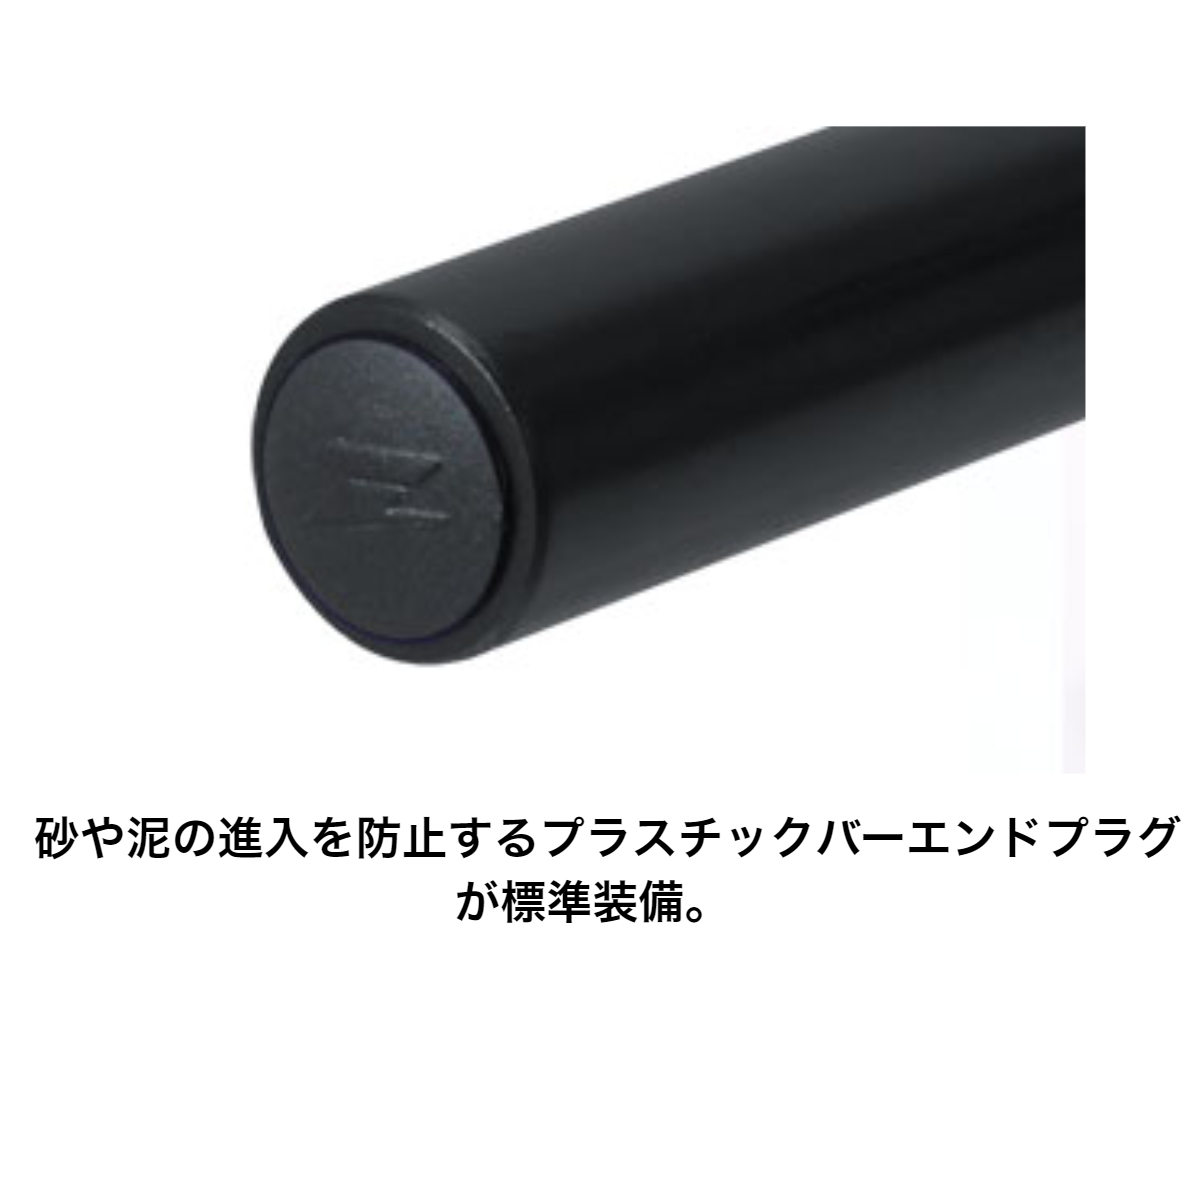 ZETA CXハンドルバー ミニレーサー LOW ブラック (22.2mm) [ZE09-9221]